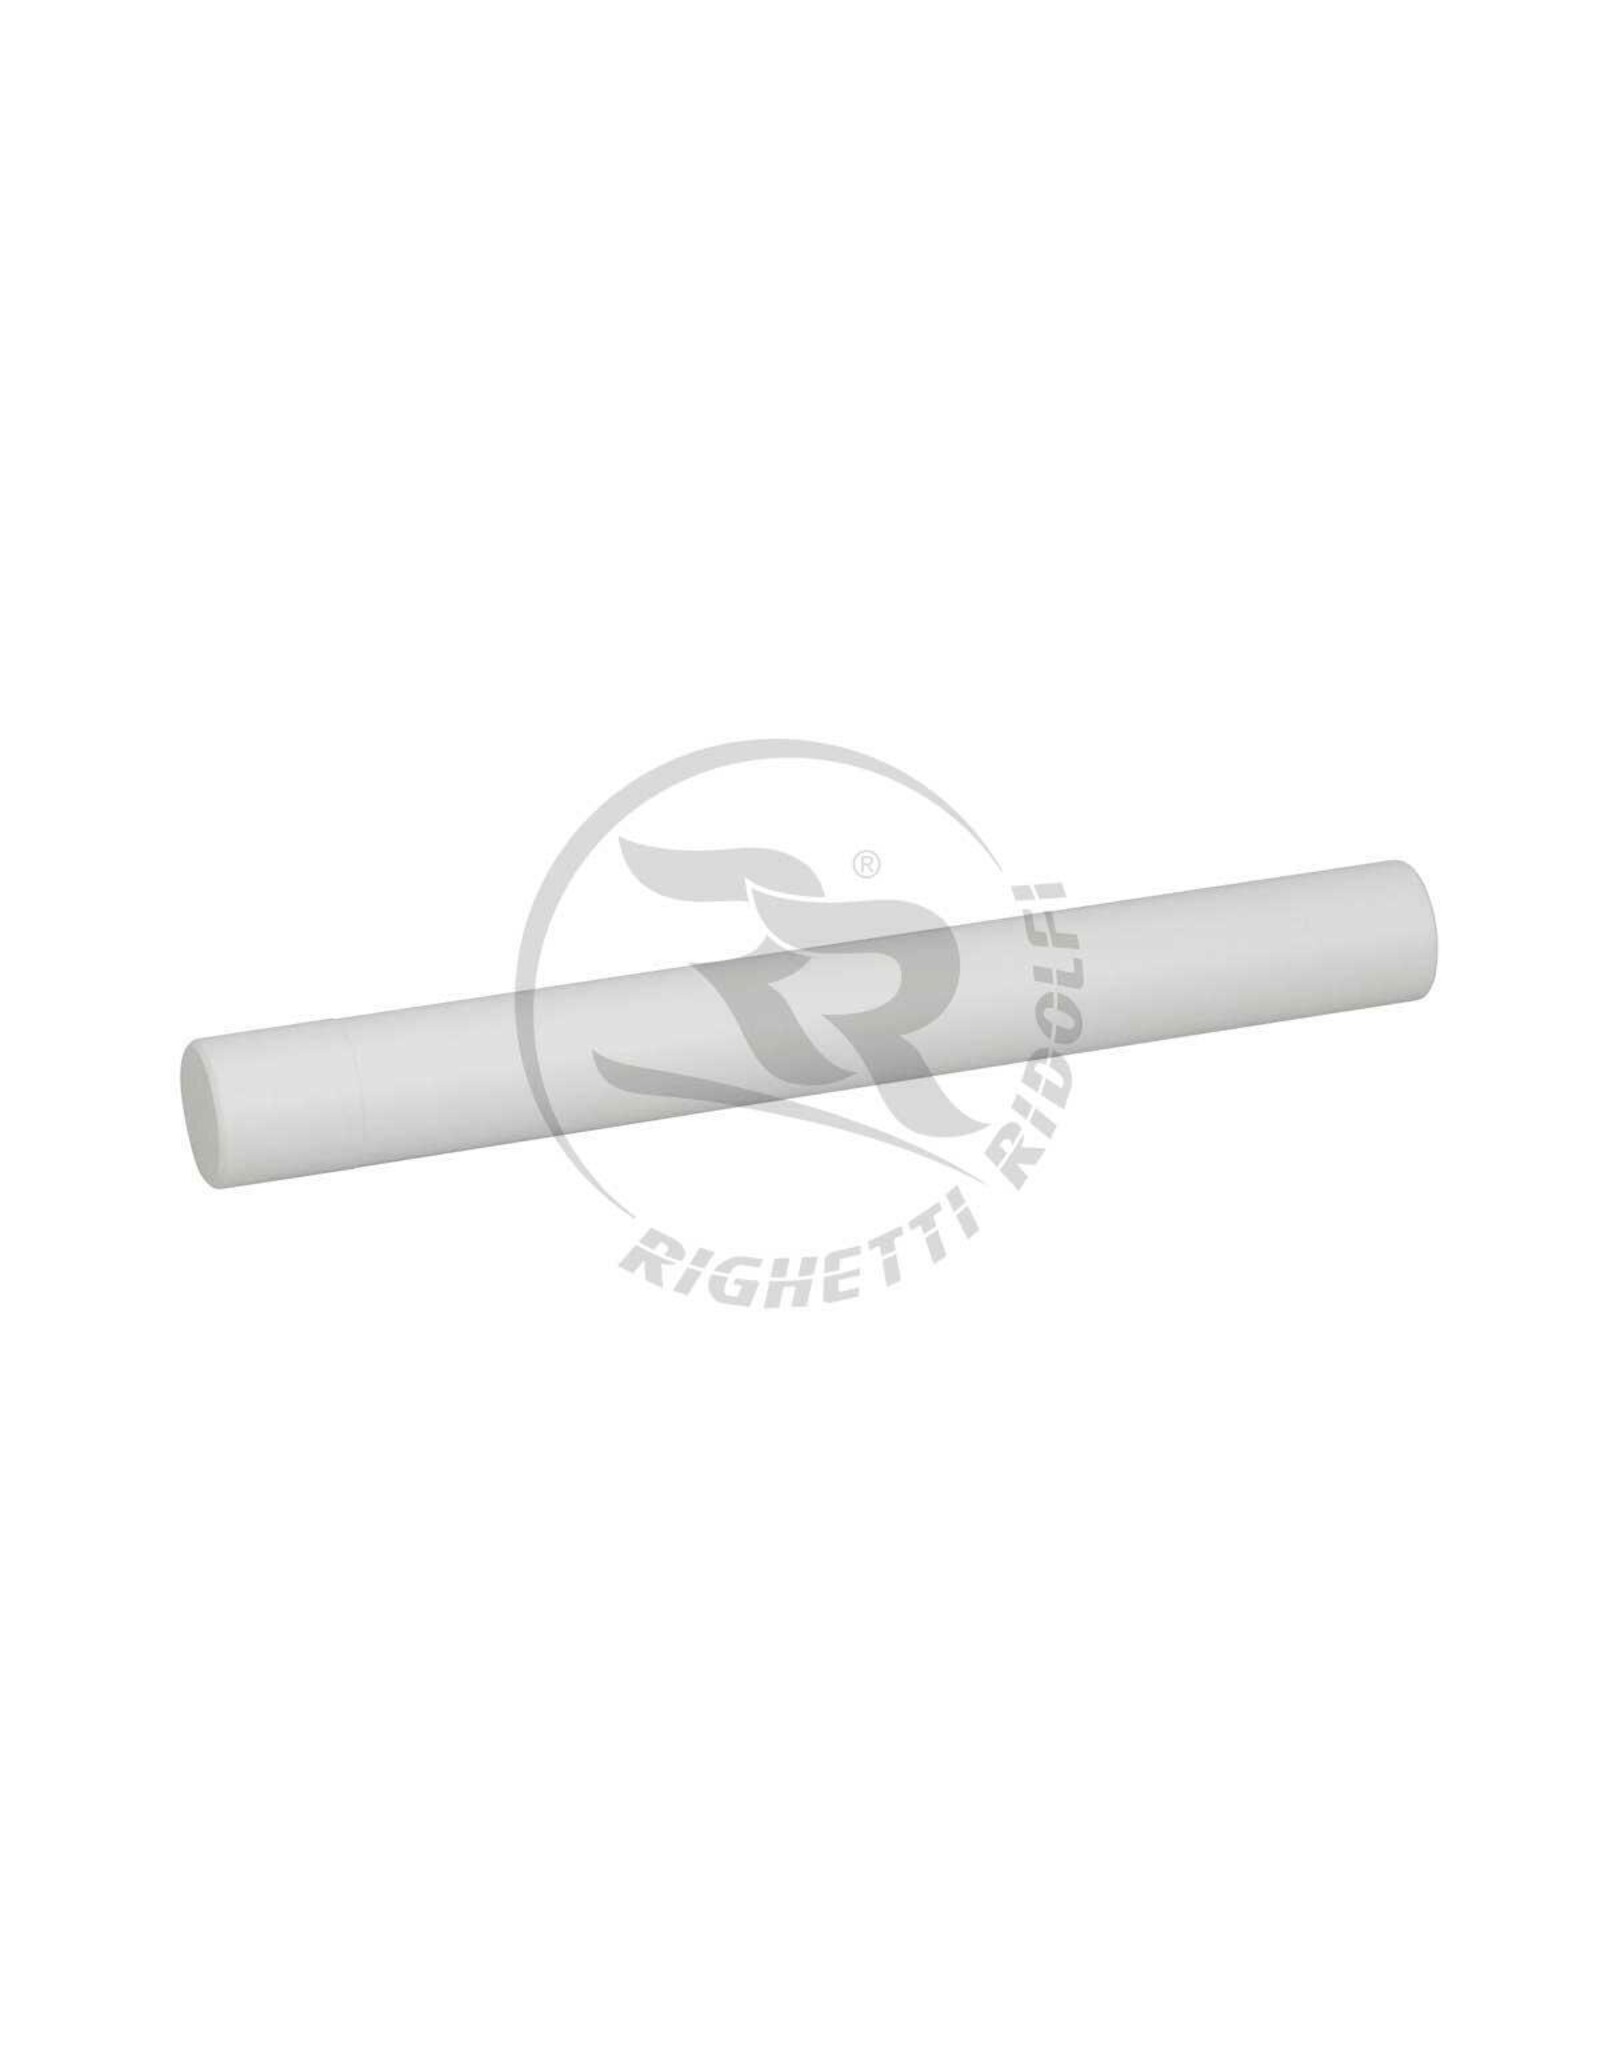 Righetti Ridolfi RR Torsion bar plastic  30 x 265 MM